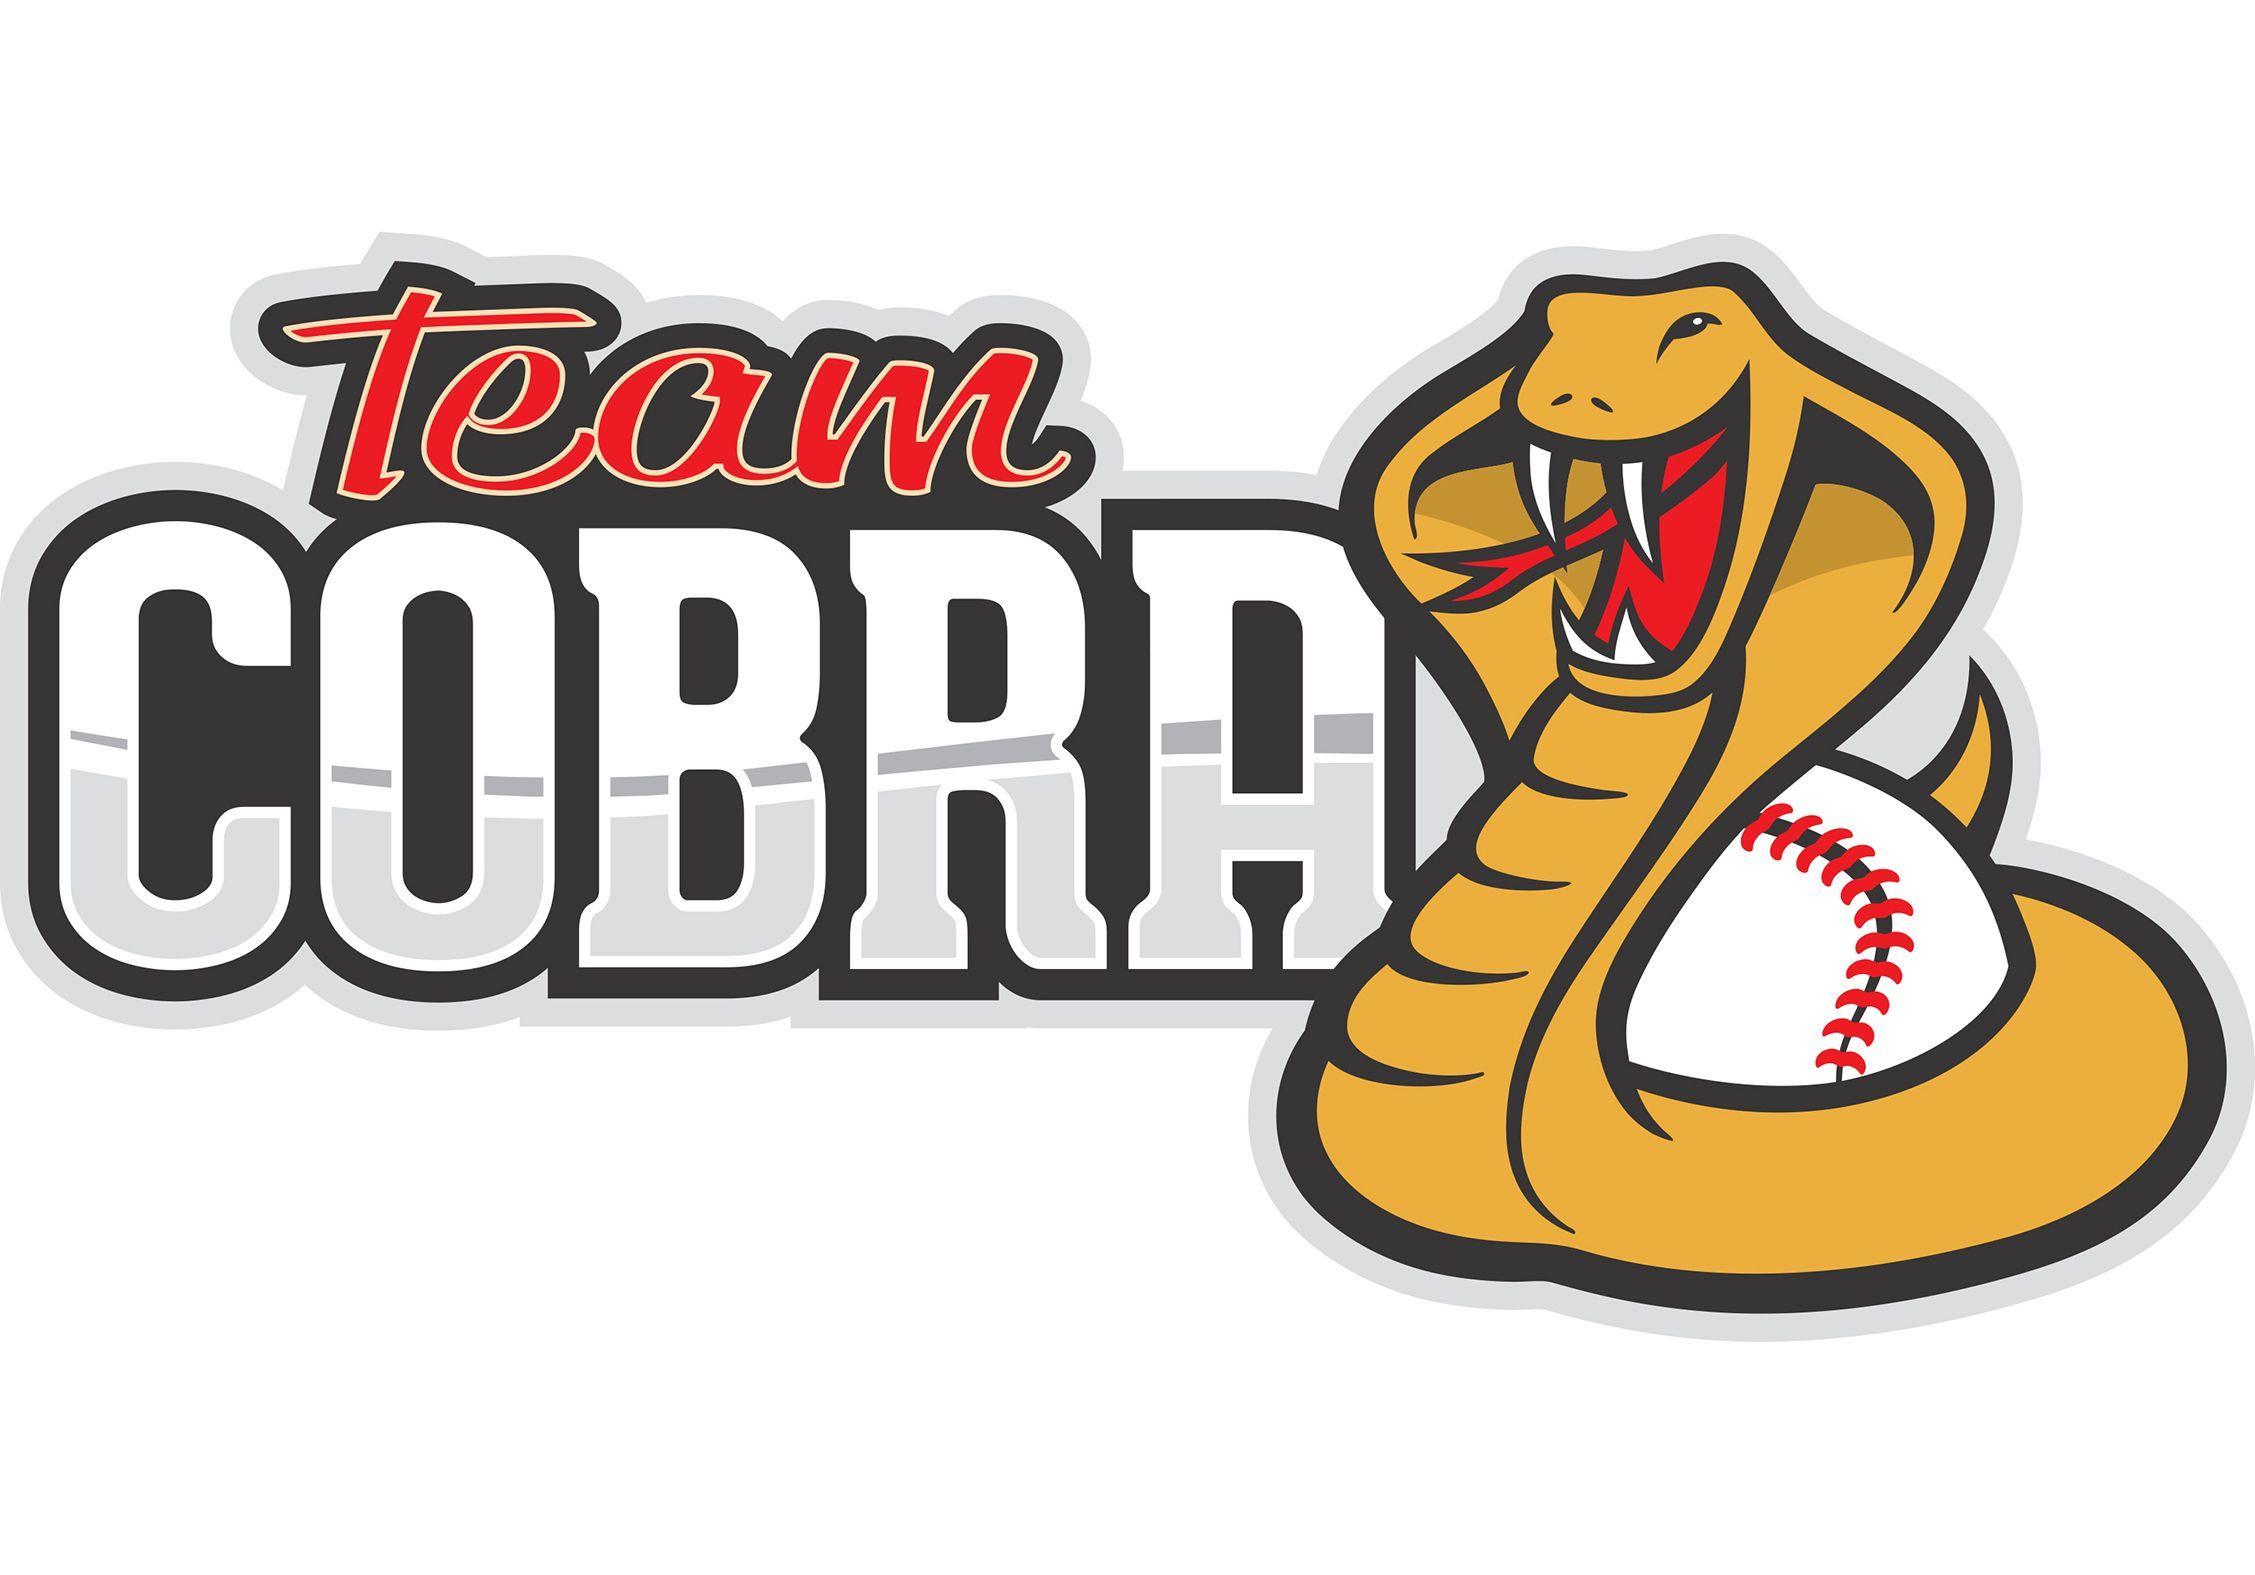 Cobras Baseball Logo - Team Cobra Logo team. Logos. Logos, Sports logo, Baseball